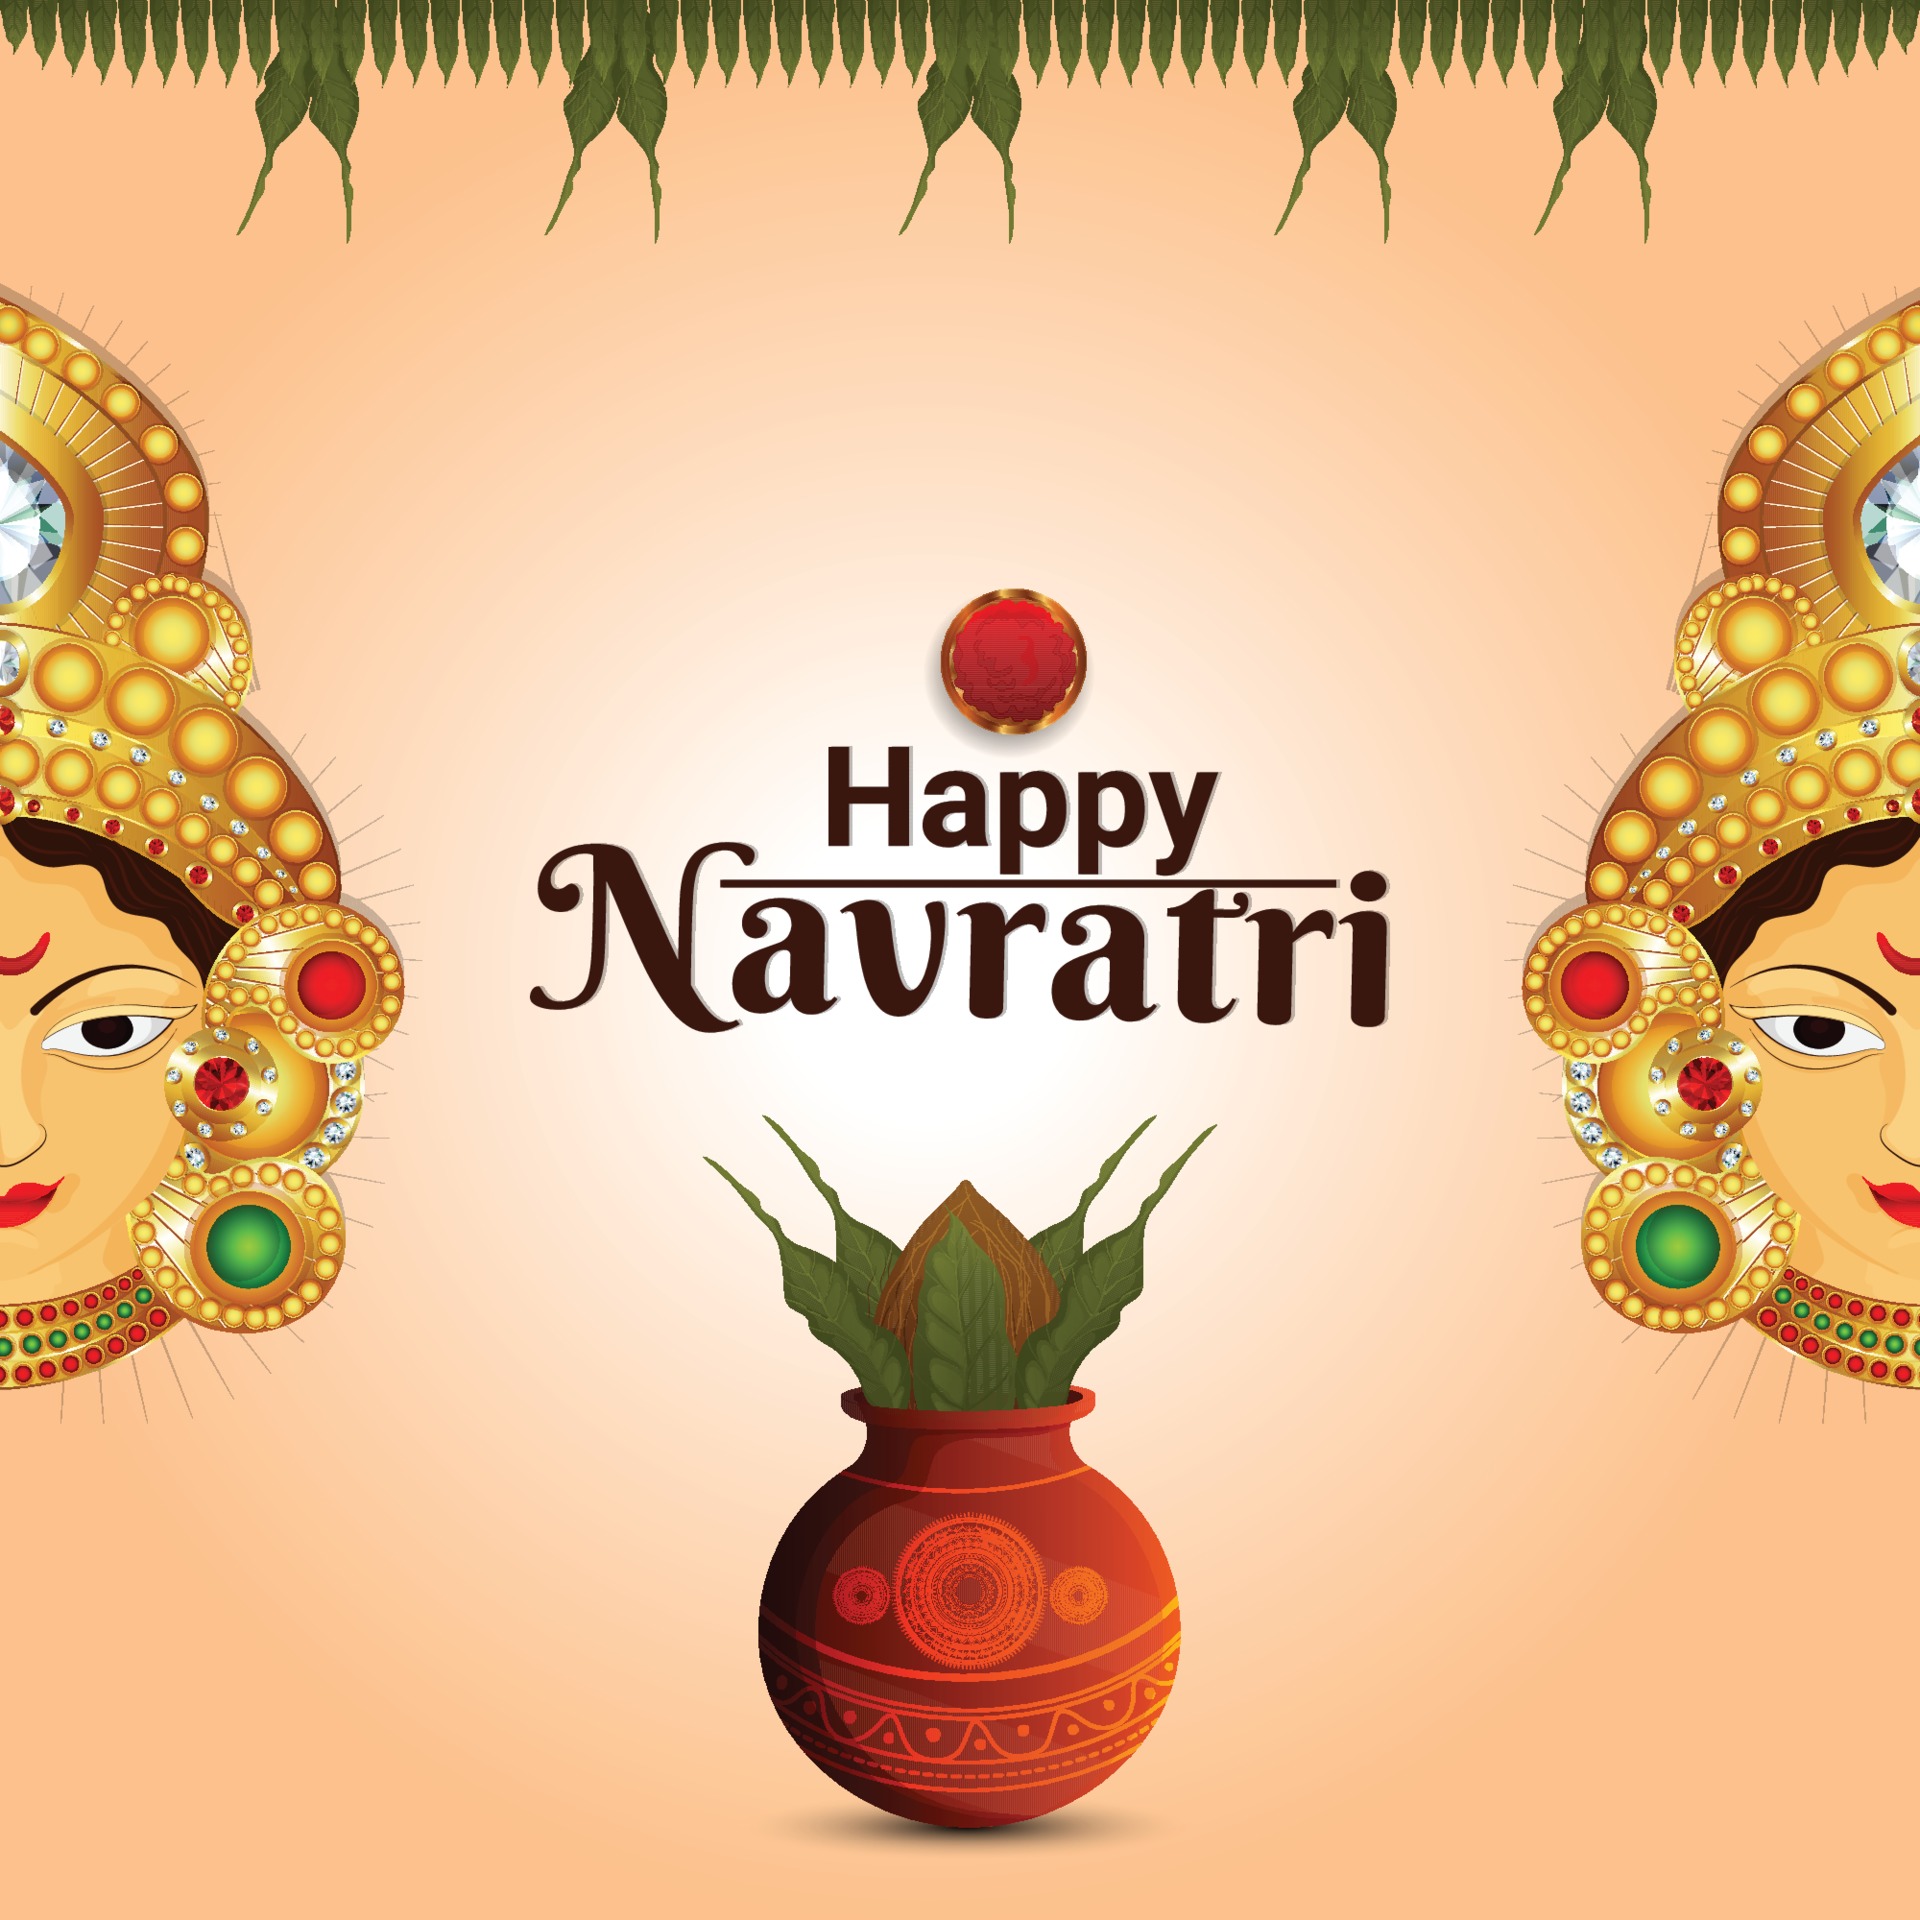 Happy navratri celebration greeting card with creative illustration of